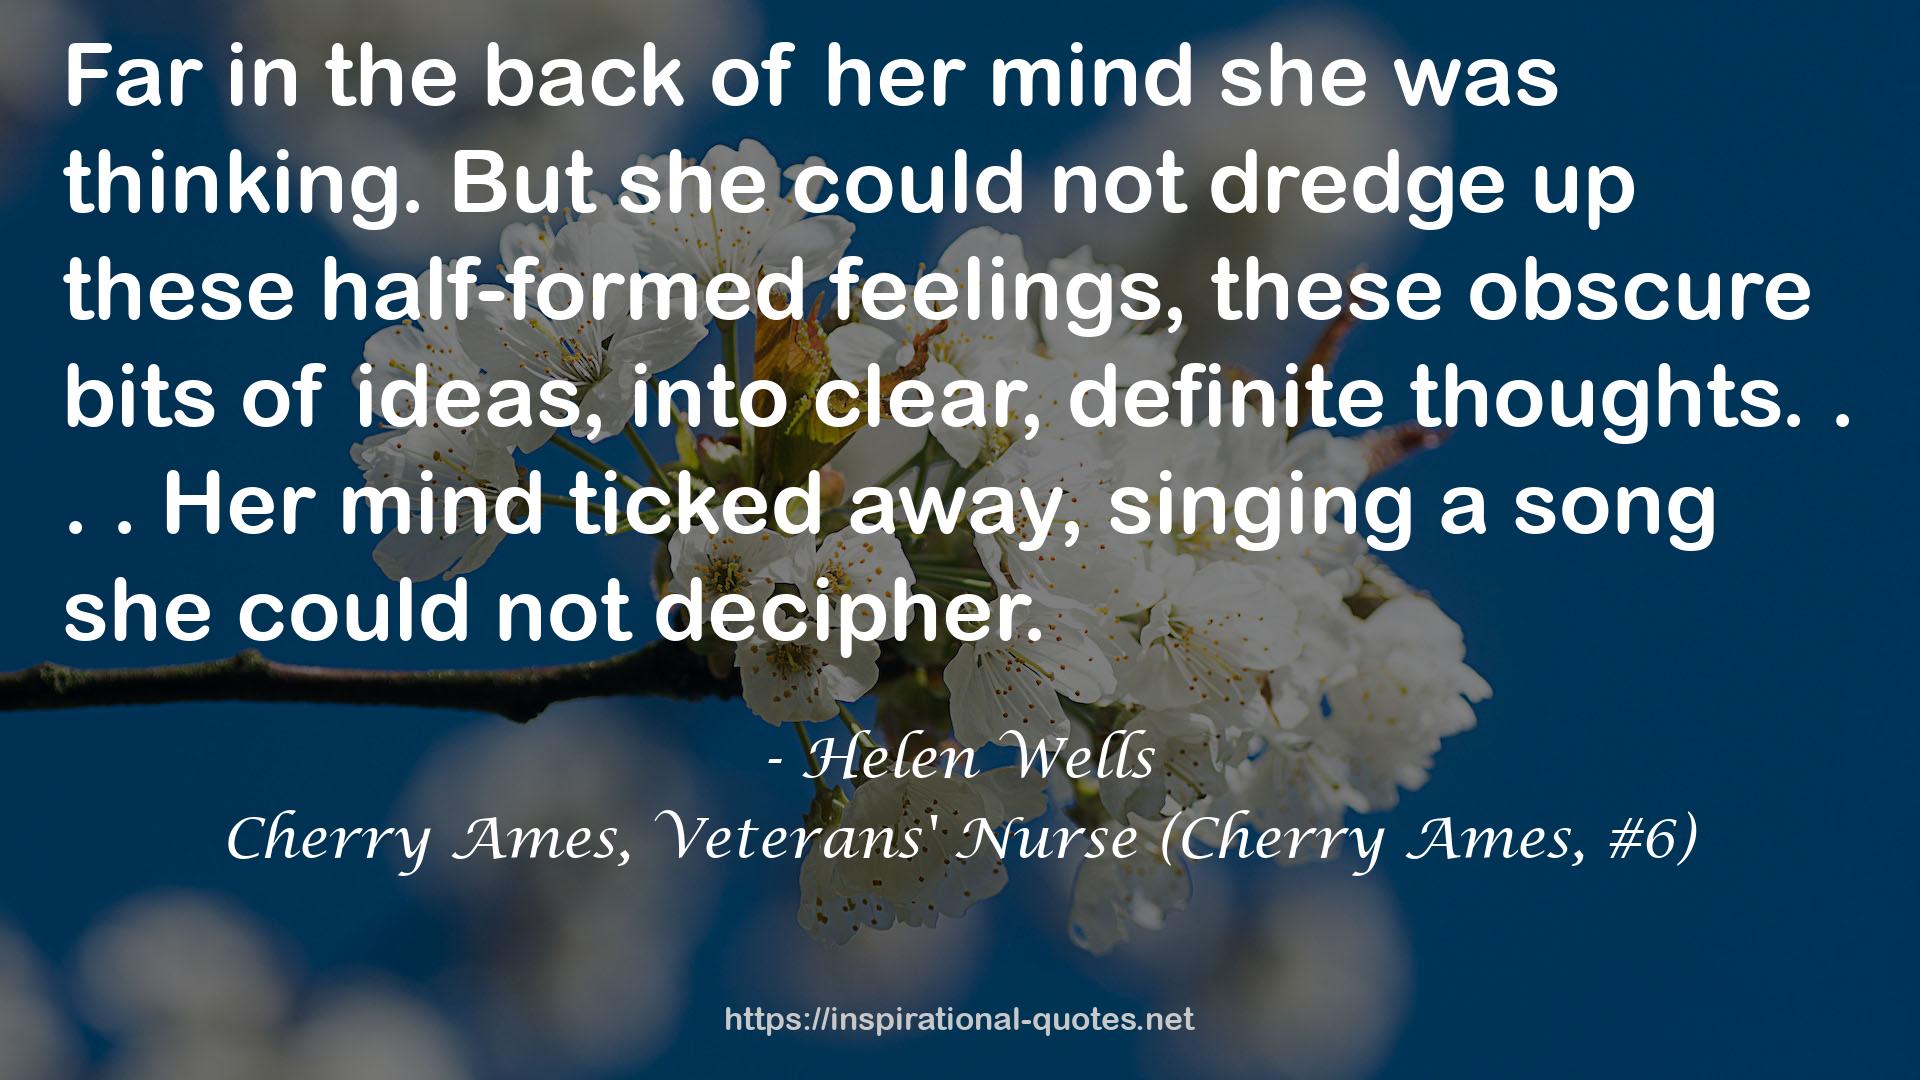 Cherry Ames, Veterans' Nurse (Cherry Ames, #6) QUOTES